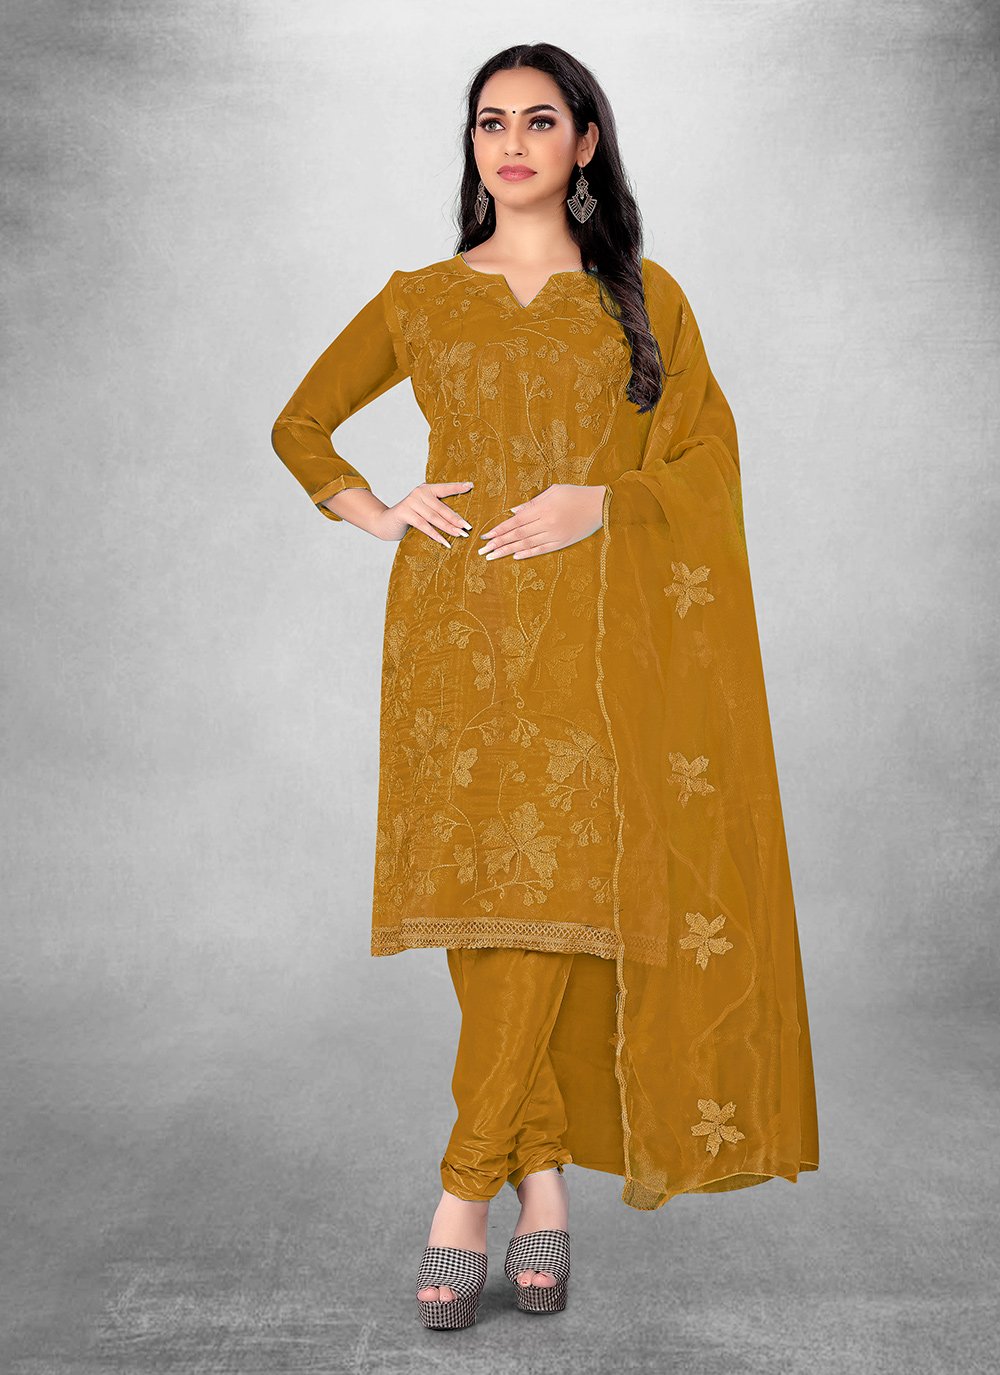 Churidar Suits: Buy Latest Designer Churidar Salwar Kameez Online